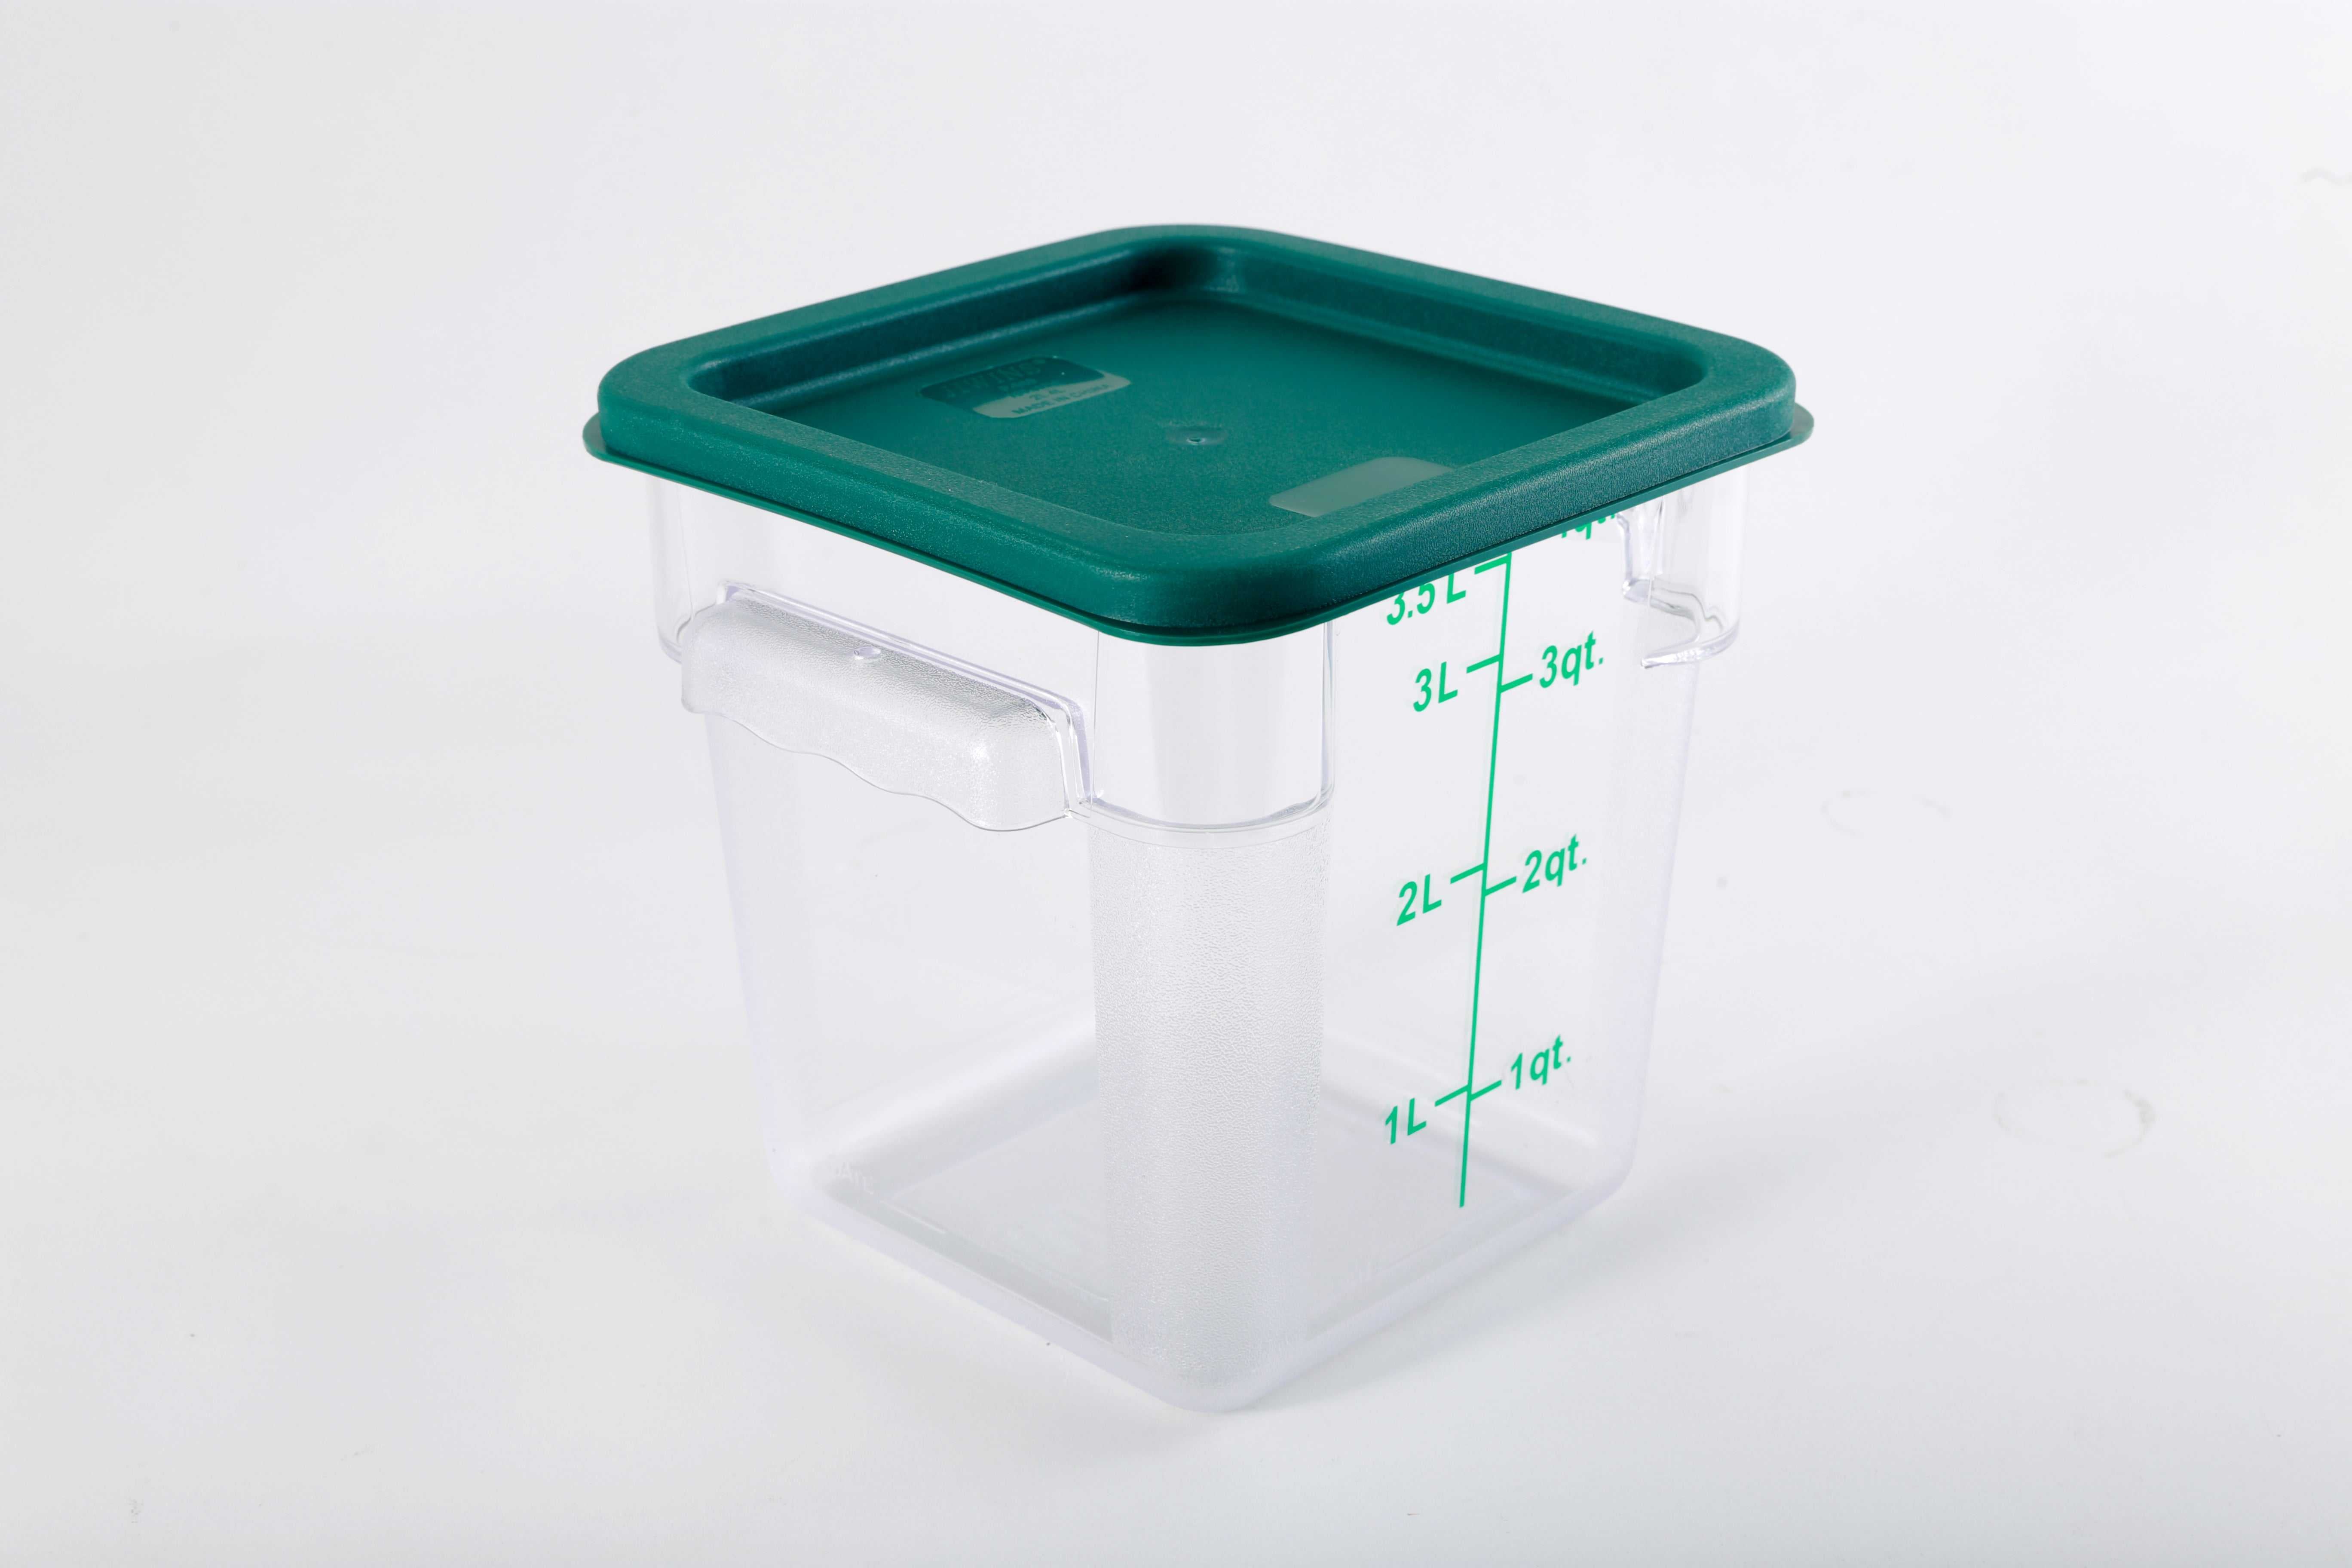 Cambro Camwear® Square Plastic Bulk Food Storage Container